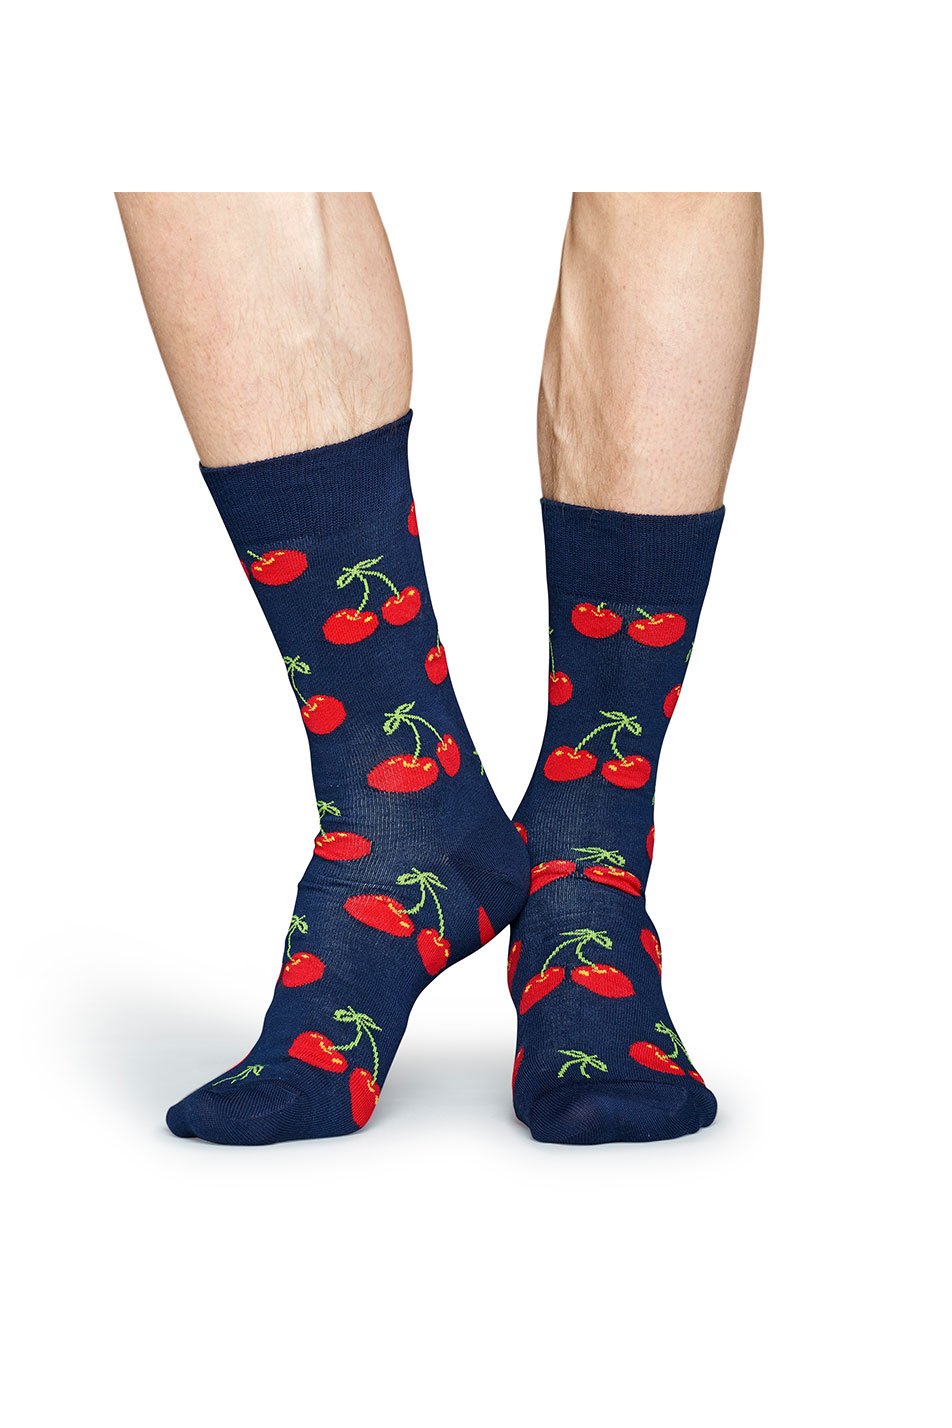 Happy Socks Cherry Sock | Save 20% on Subscription | Pants & Socks